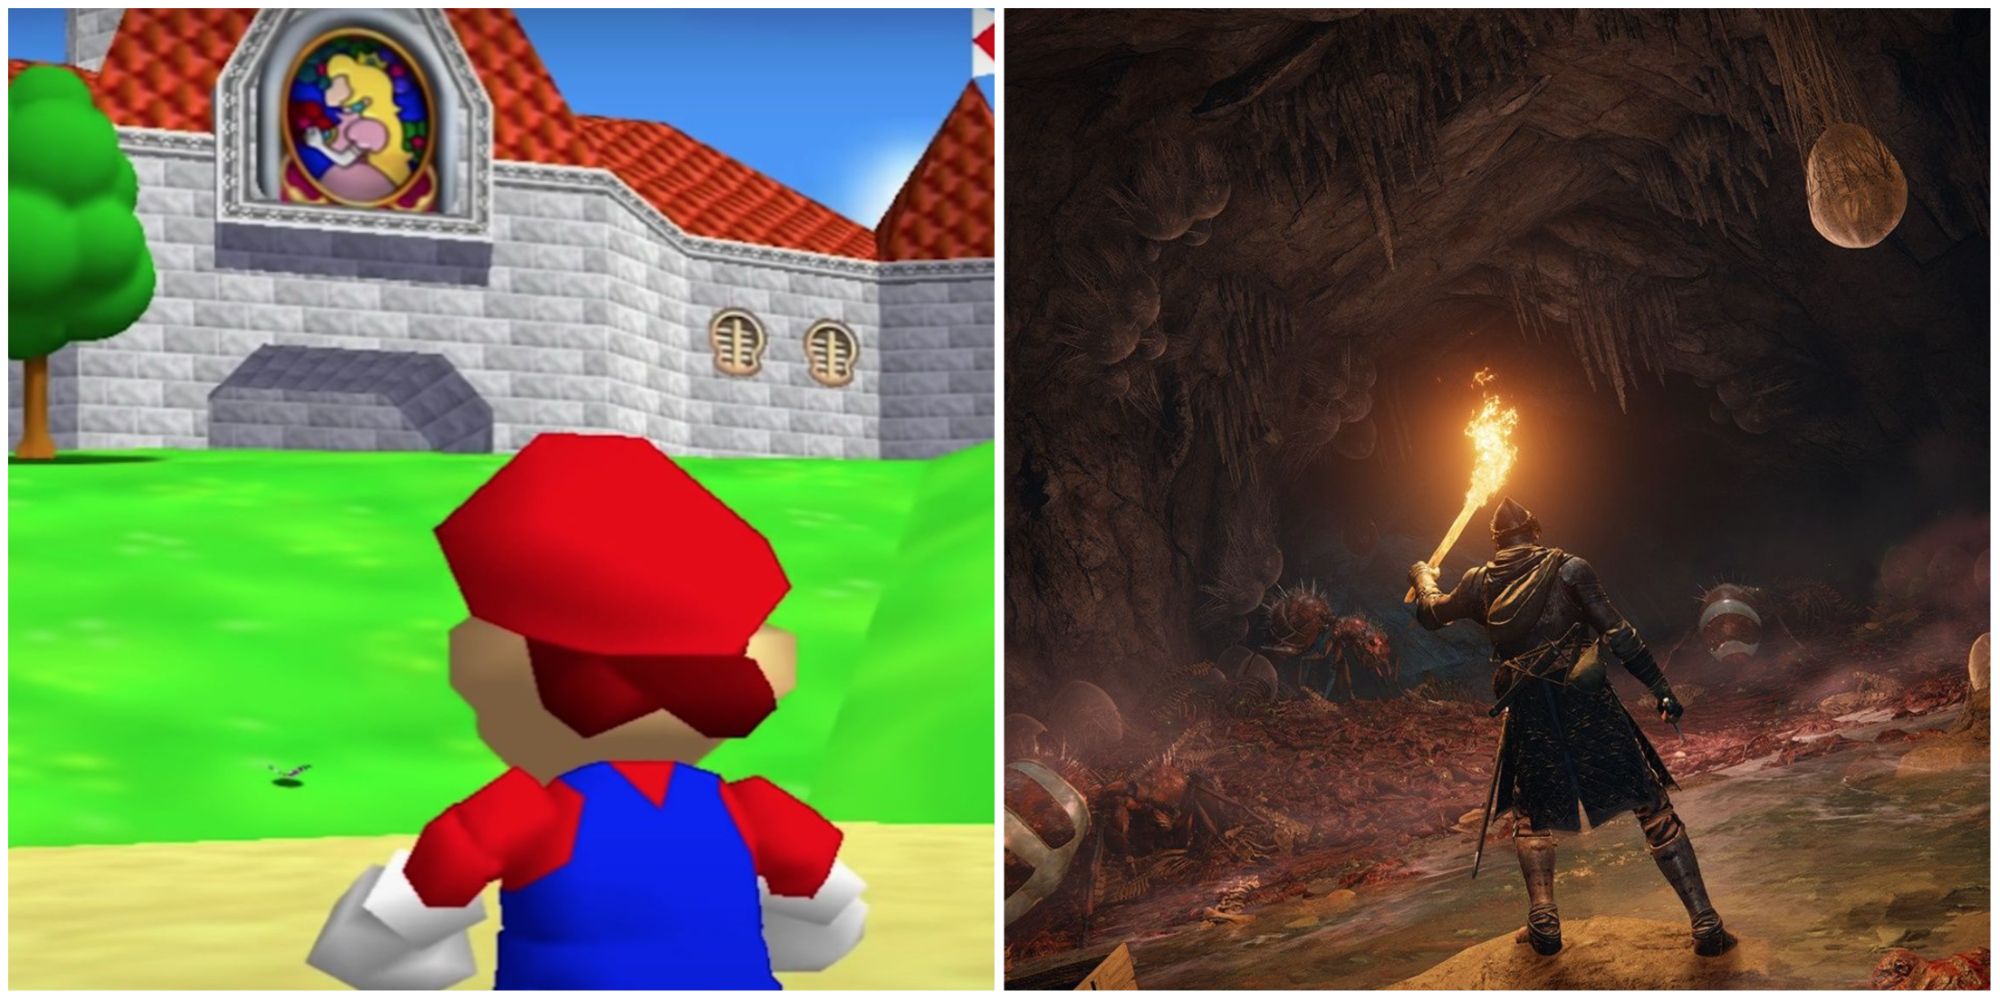 Super Mario 64 And Elden Ring Split Image